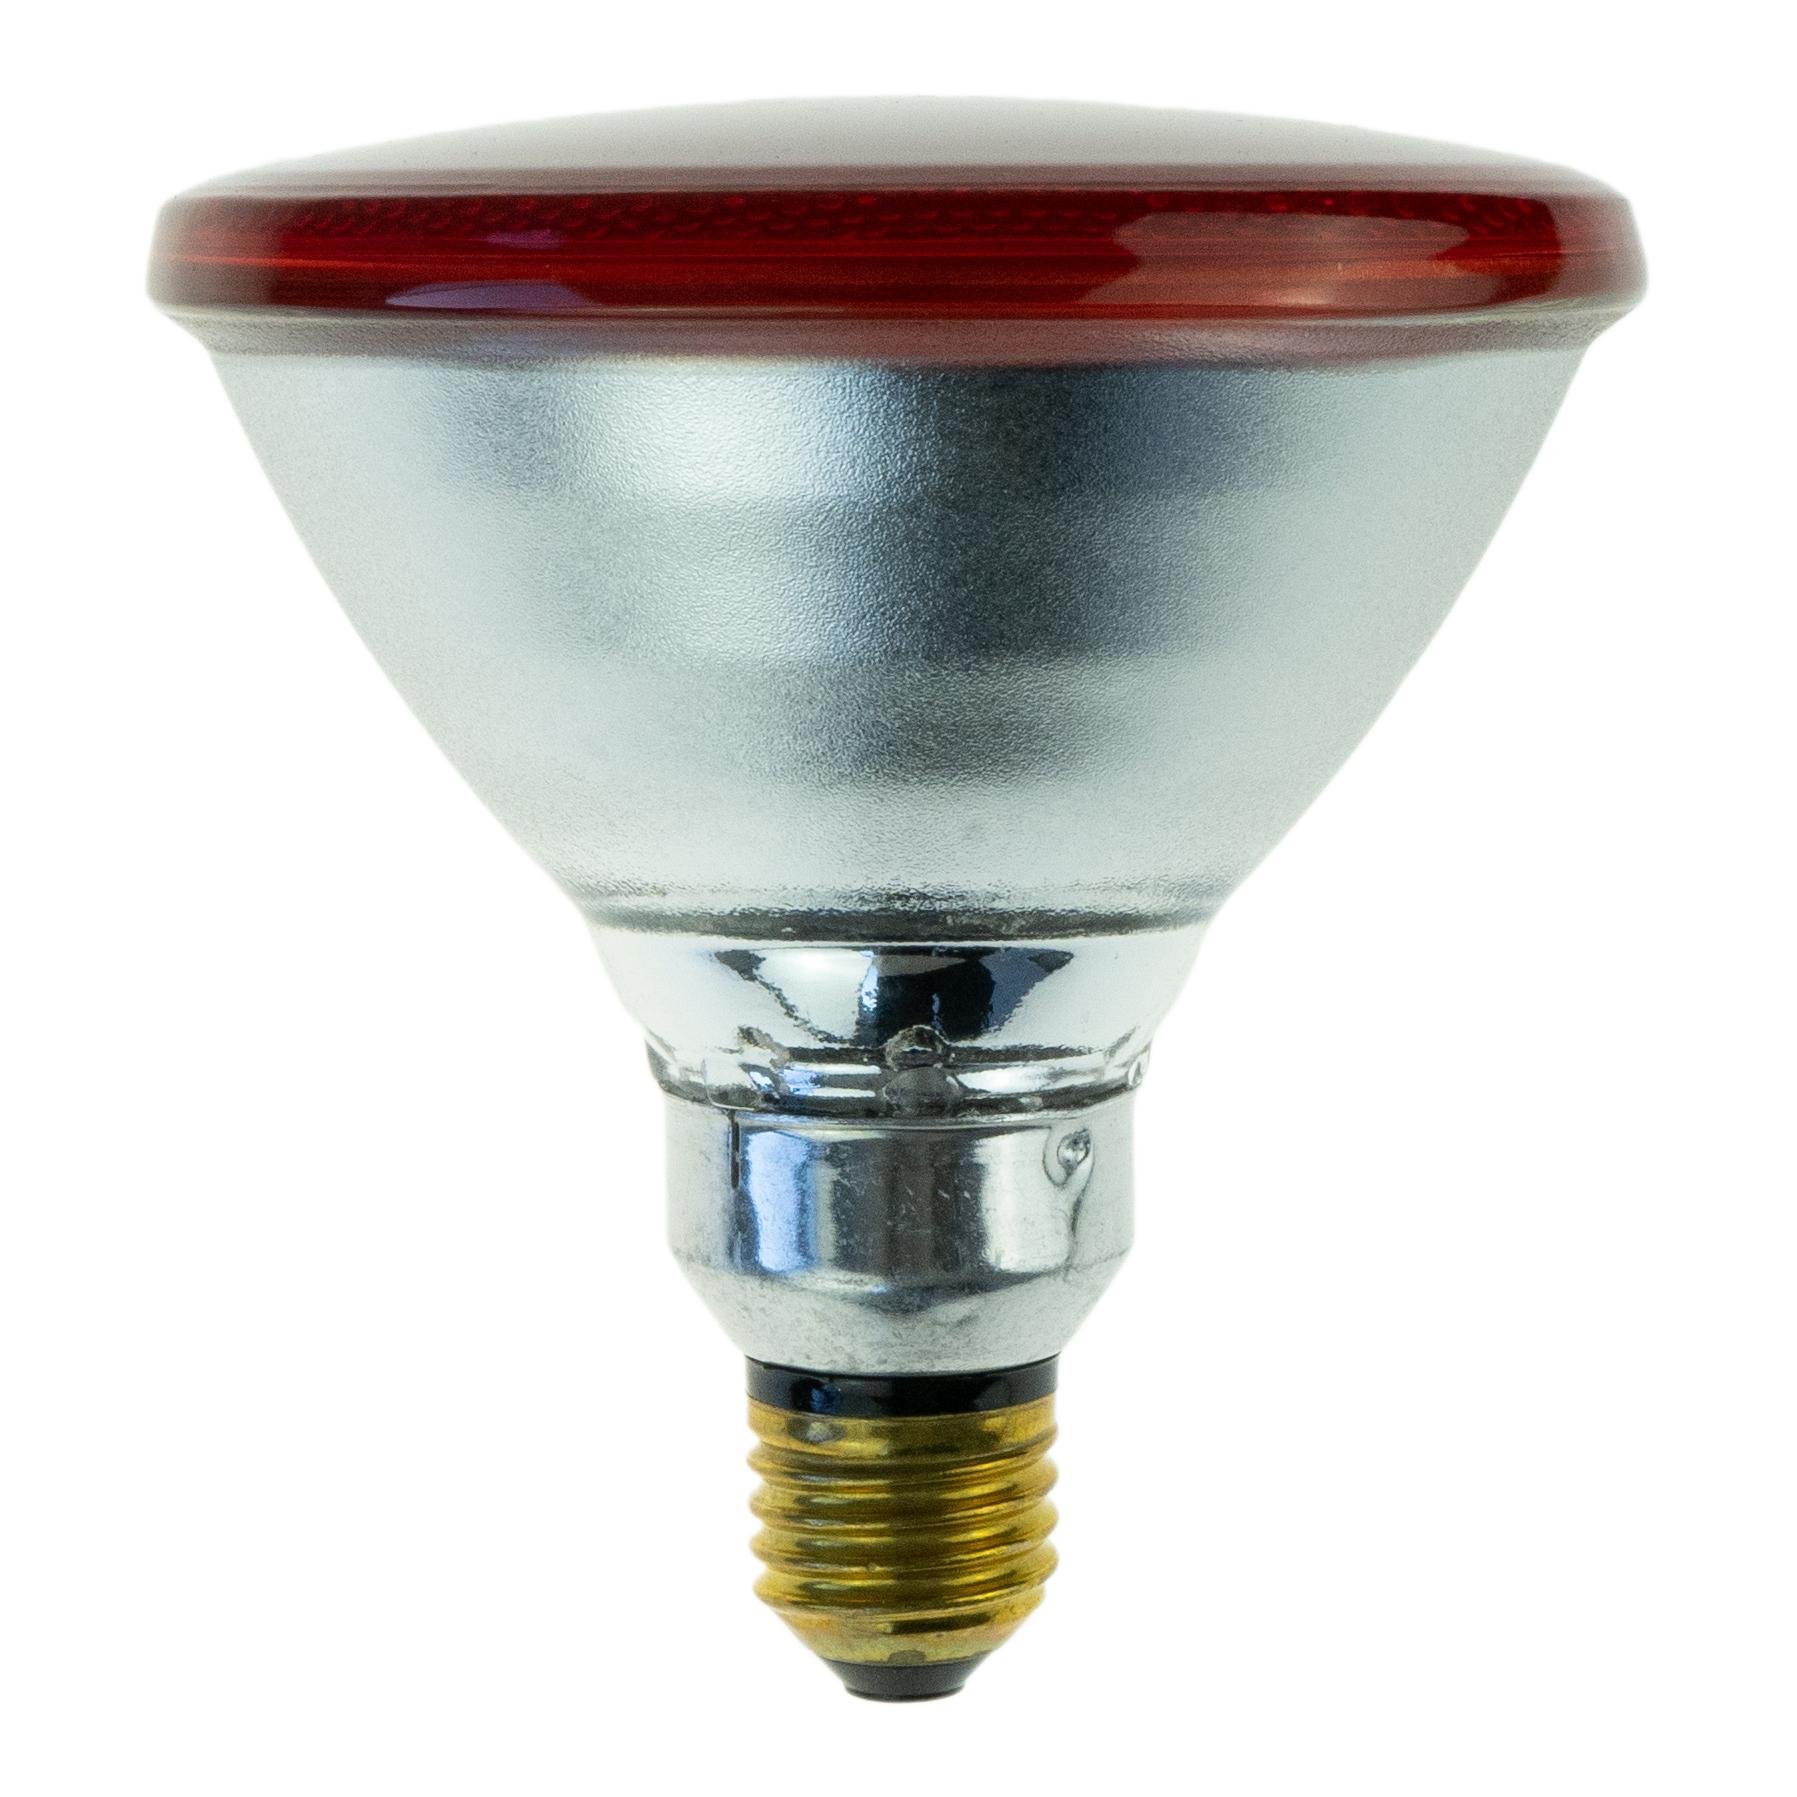 Lampe chauffante - infrarouge - 175 W - Universel